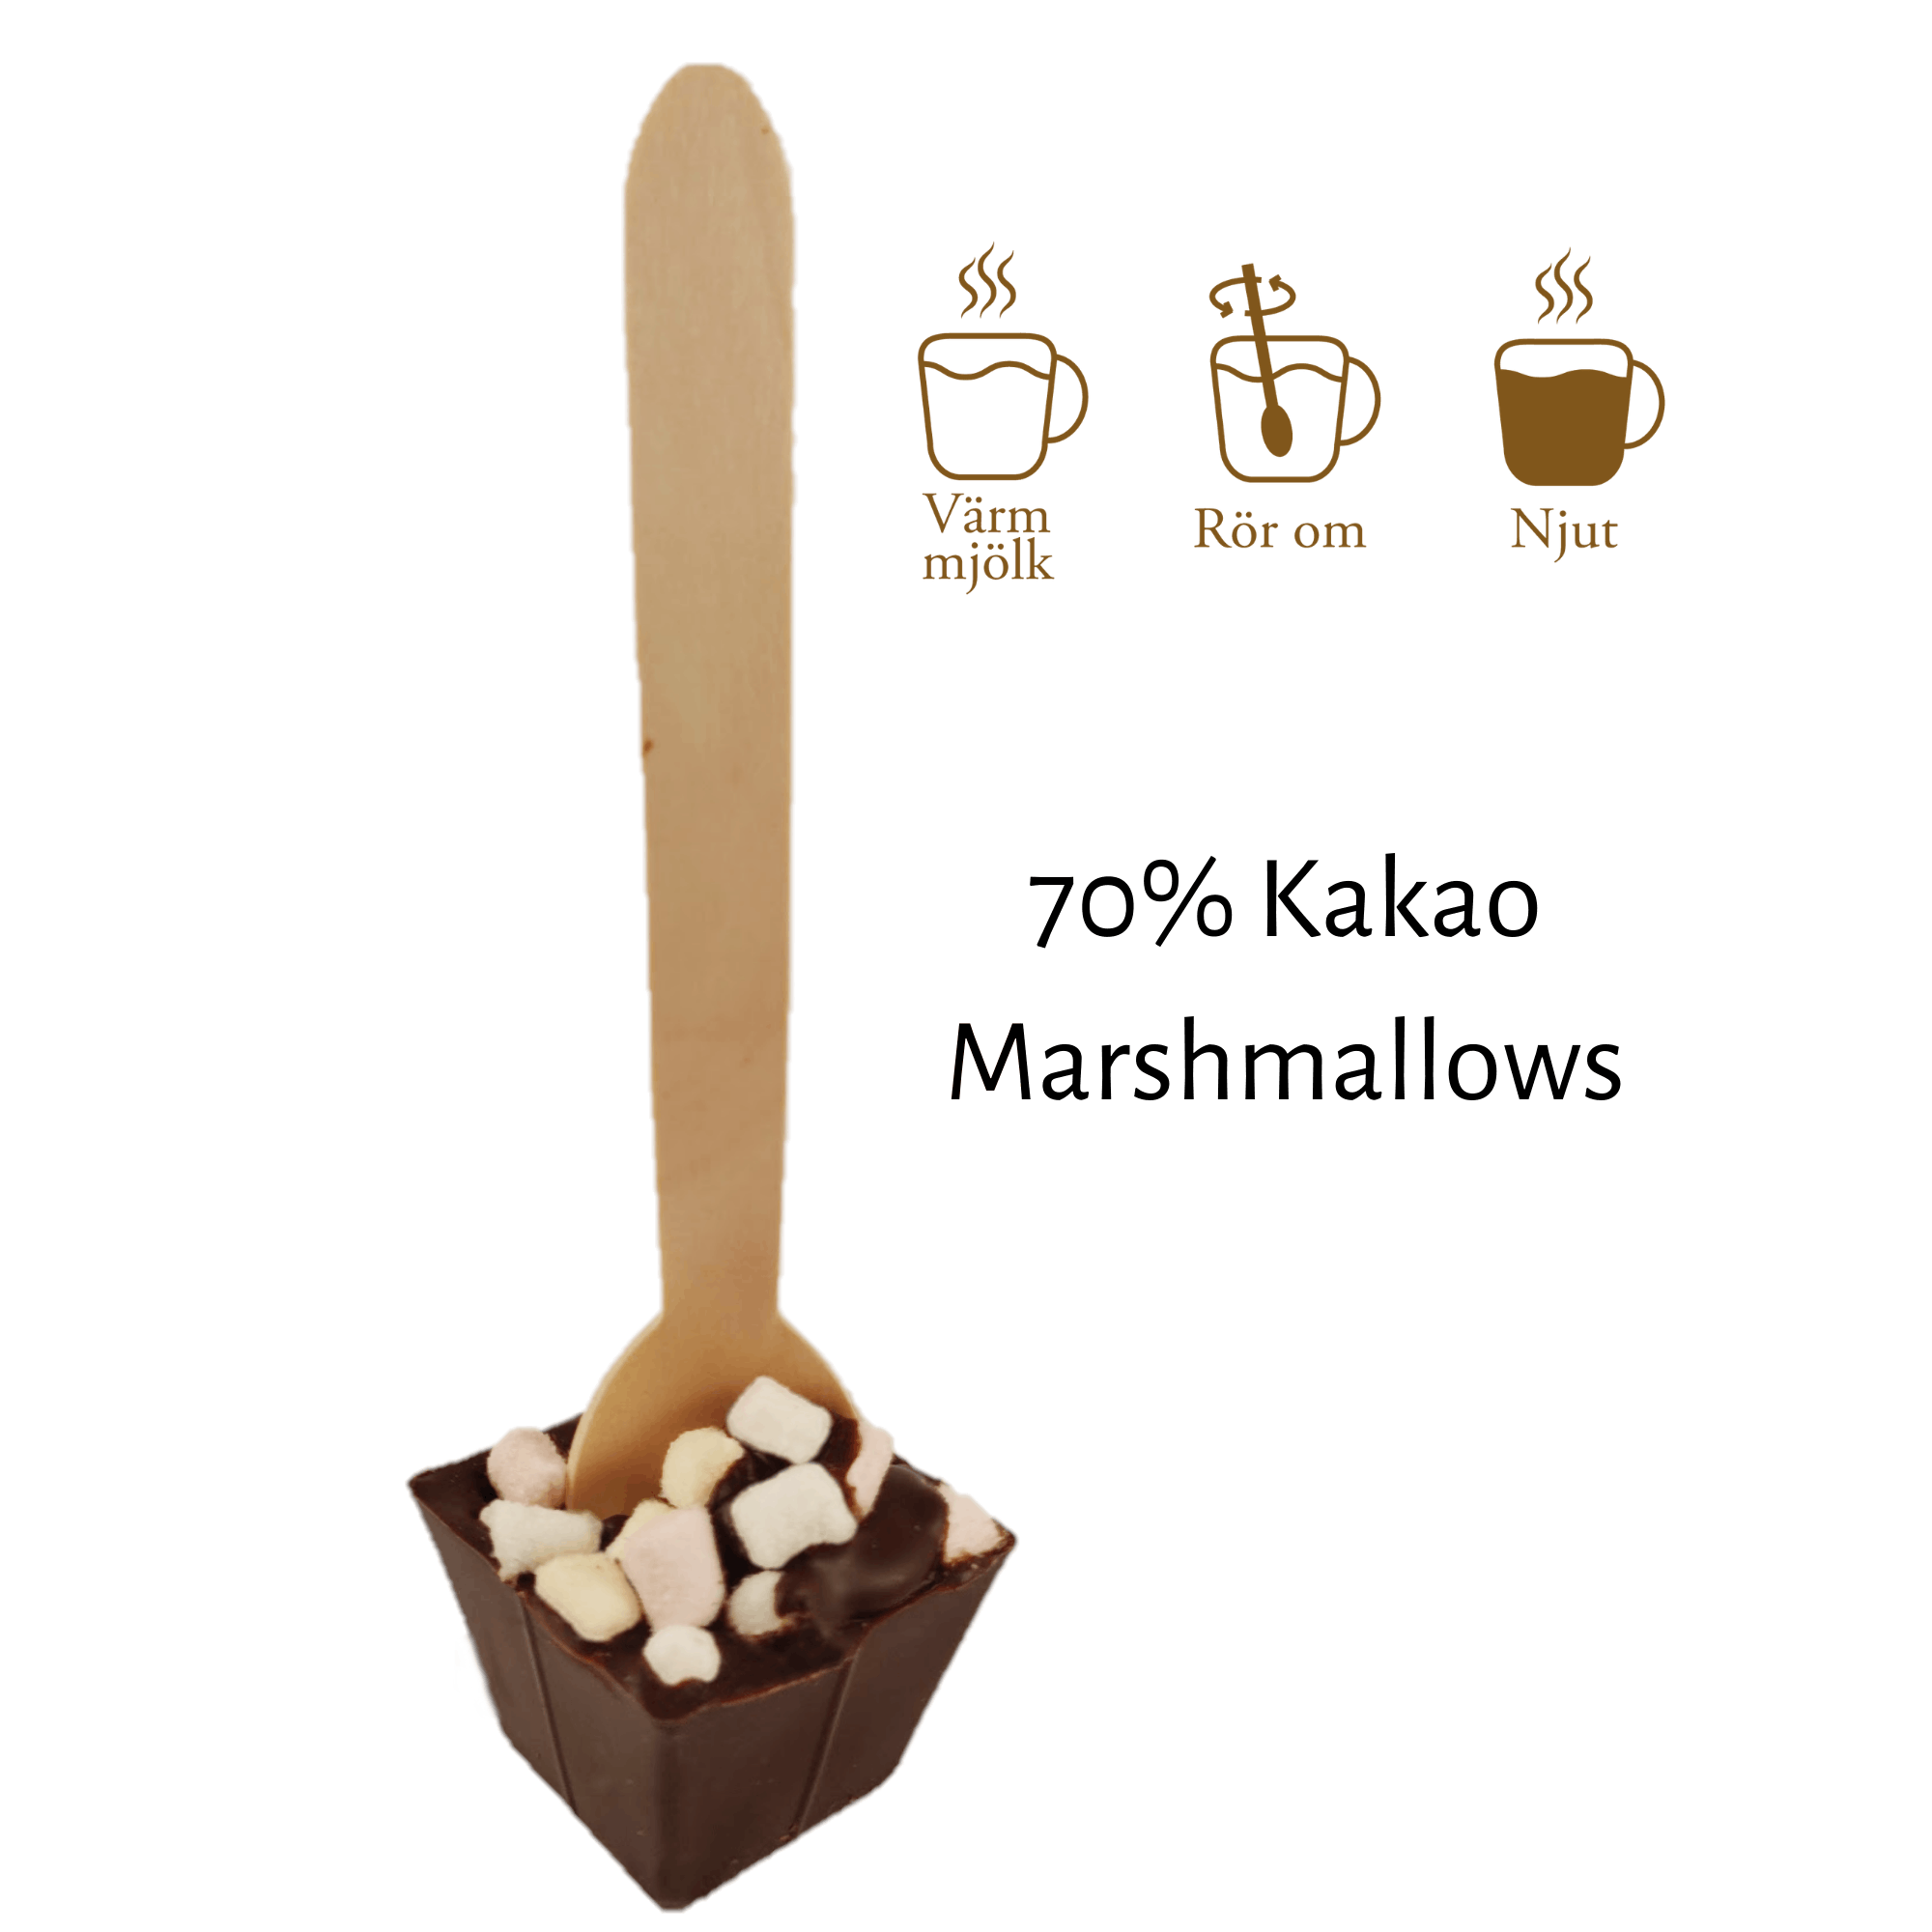 Drickchoklad - 70% Choklad - Marshmallows 50g (x 15st)